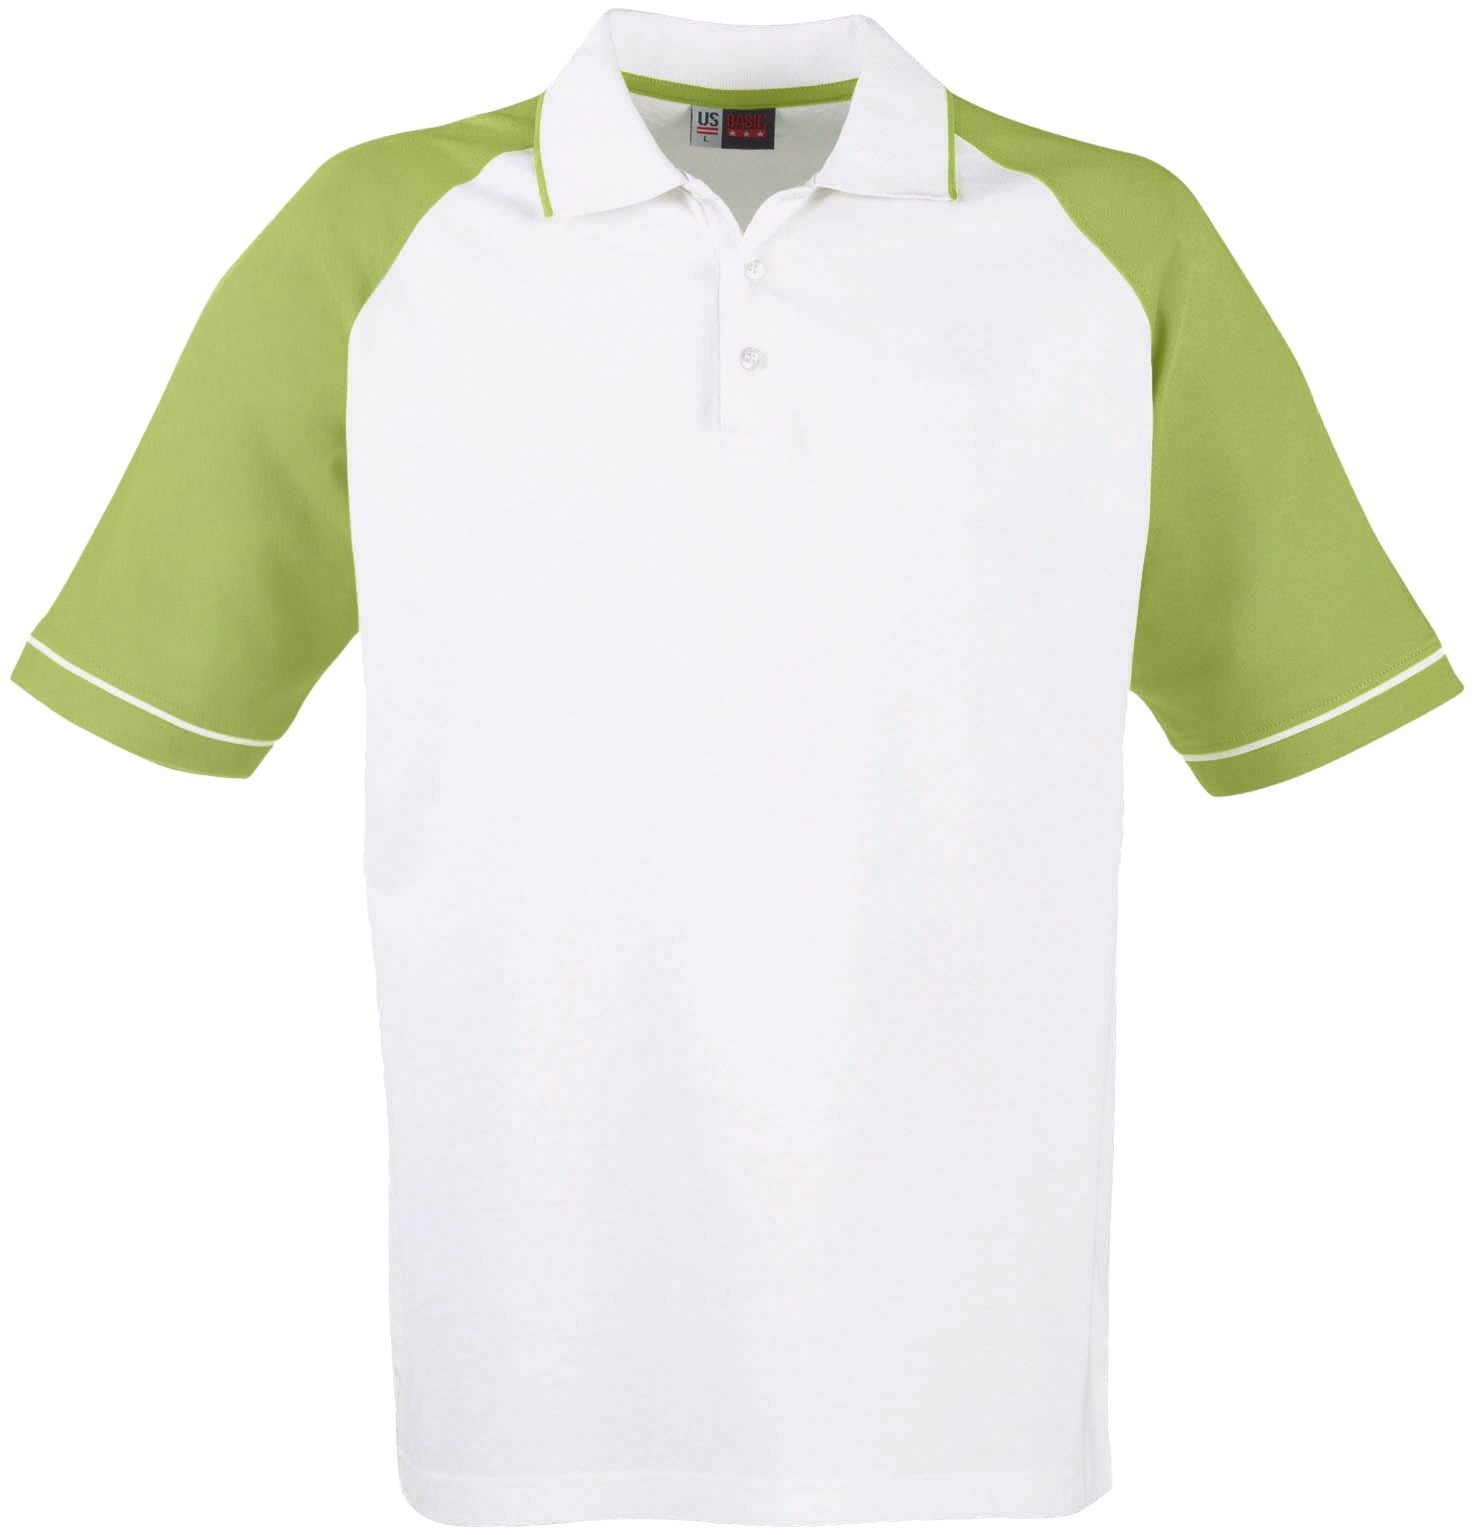 Mens Sydney Golf Shirt - Black Only-2XL-Green-G